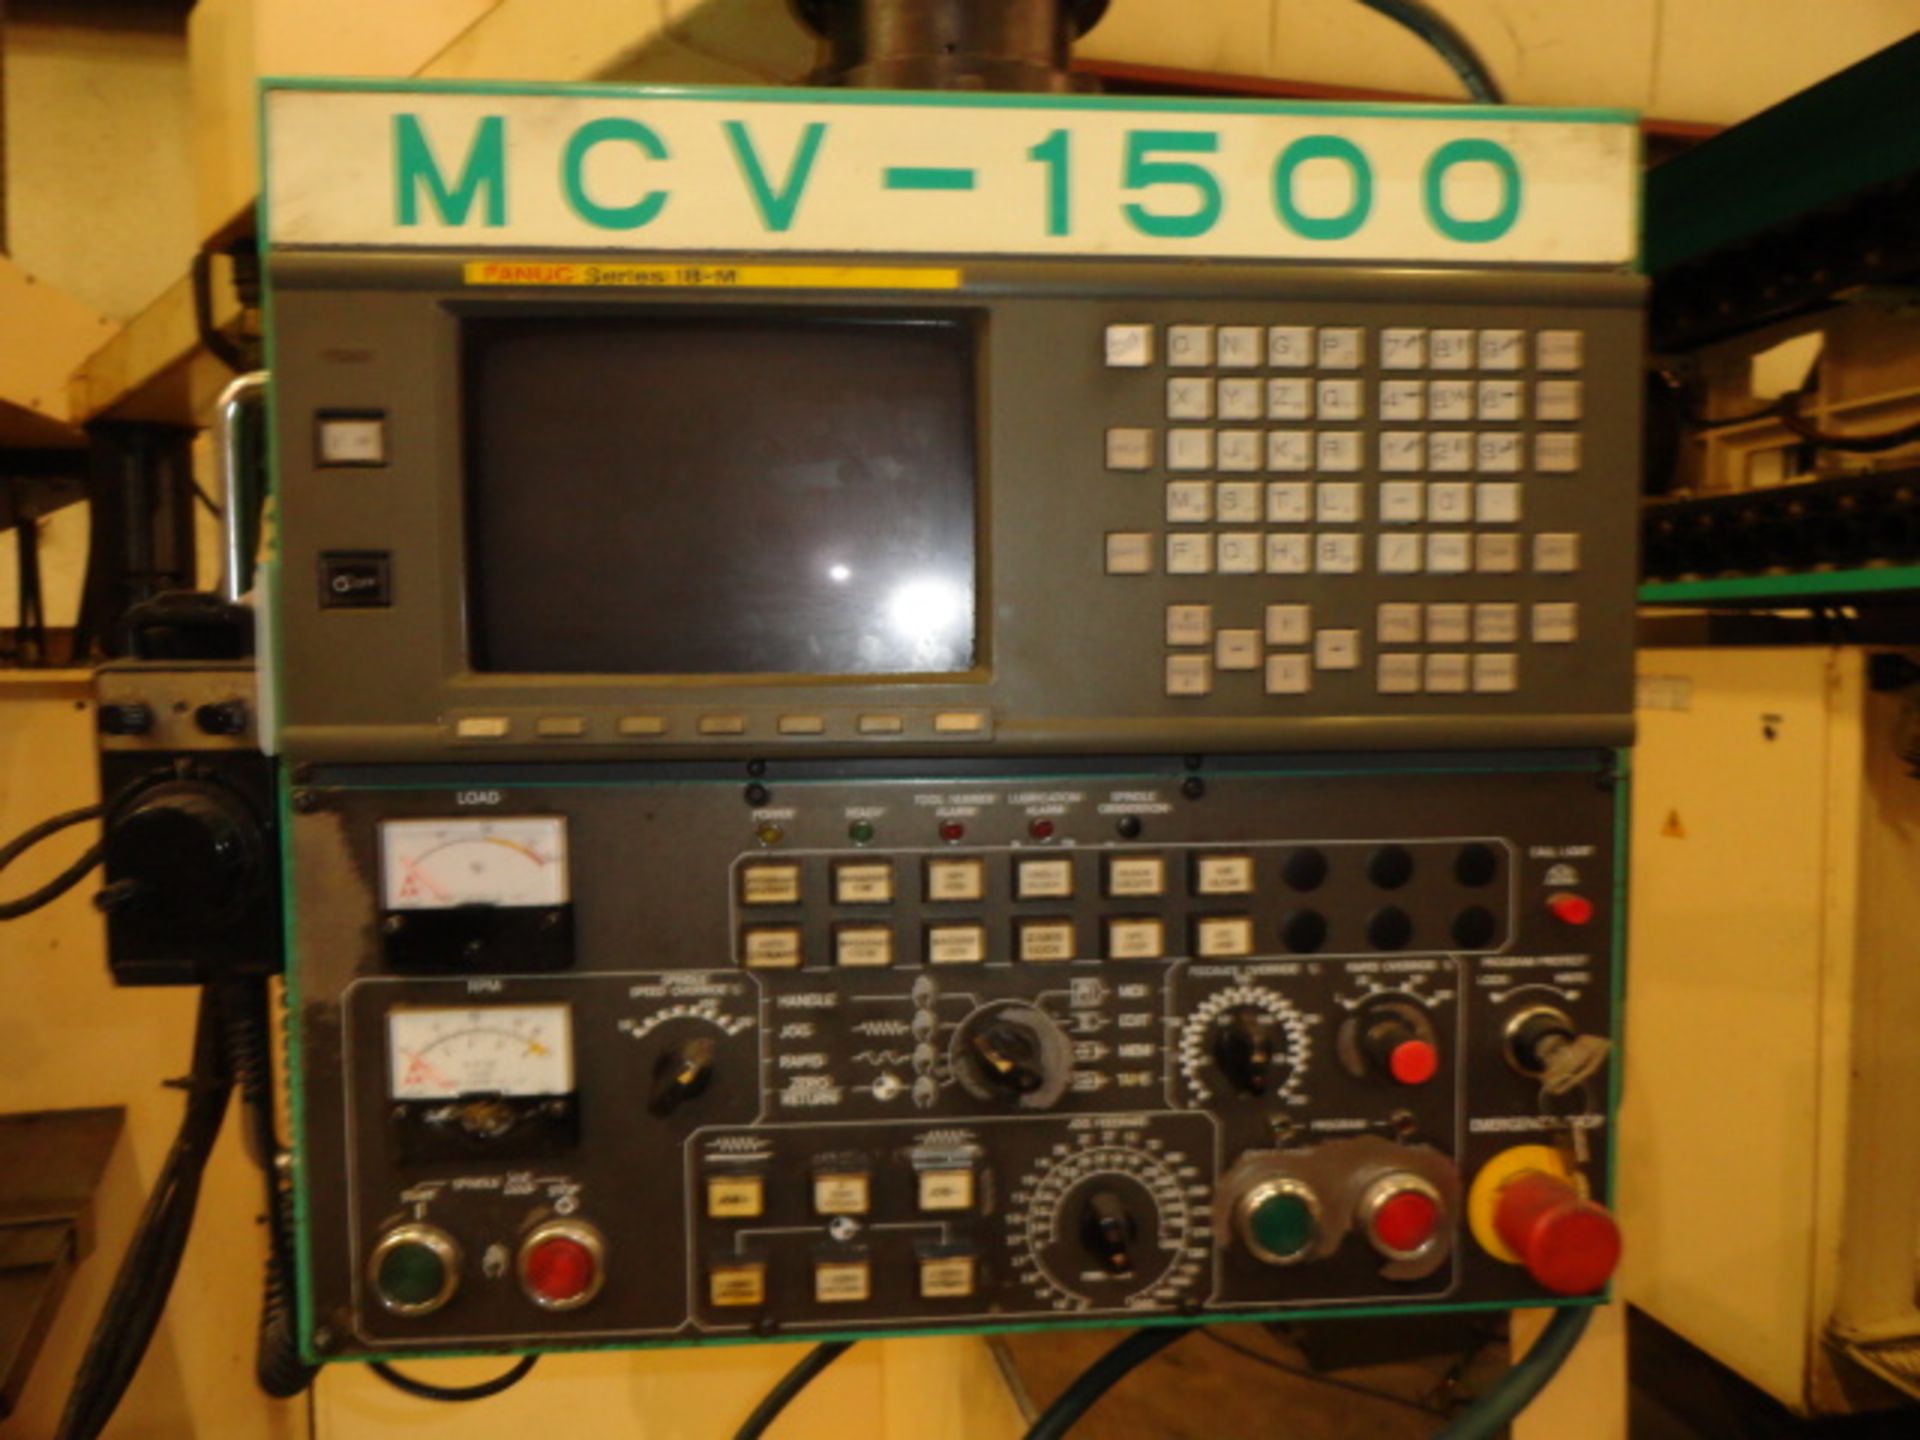 CNC VERTICAL MACHINING CENTER, DAHLIH MDL. MCV-1500, new 2001, Fanuc 18M CNC control, 67” x 26.8” - Image 5 of 6